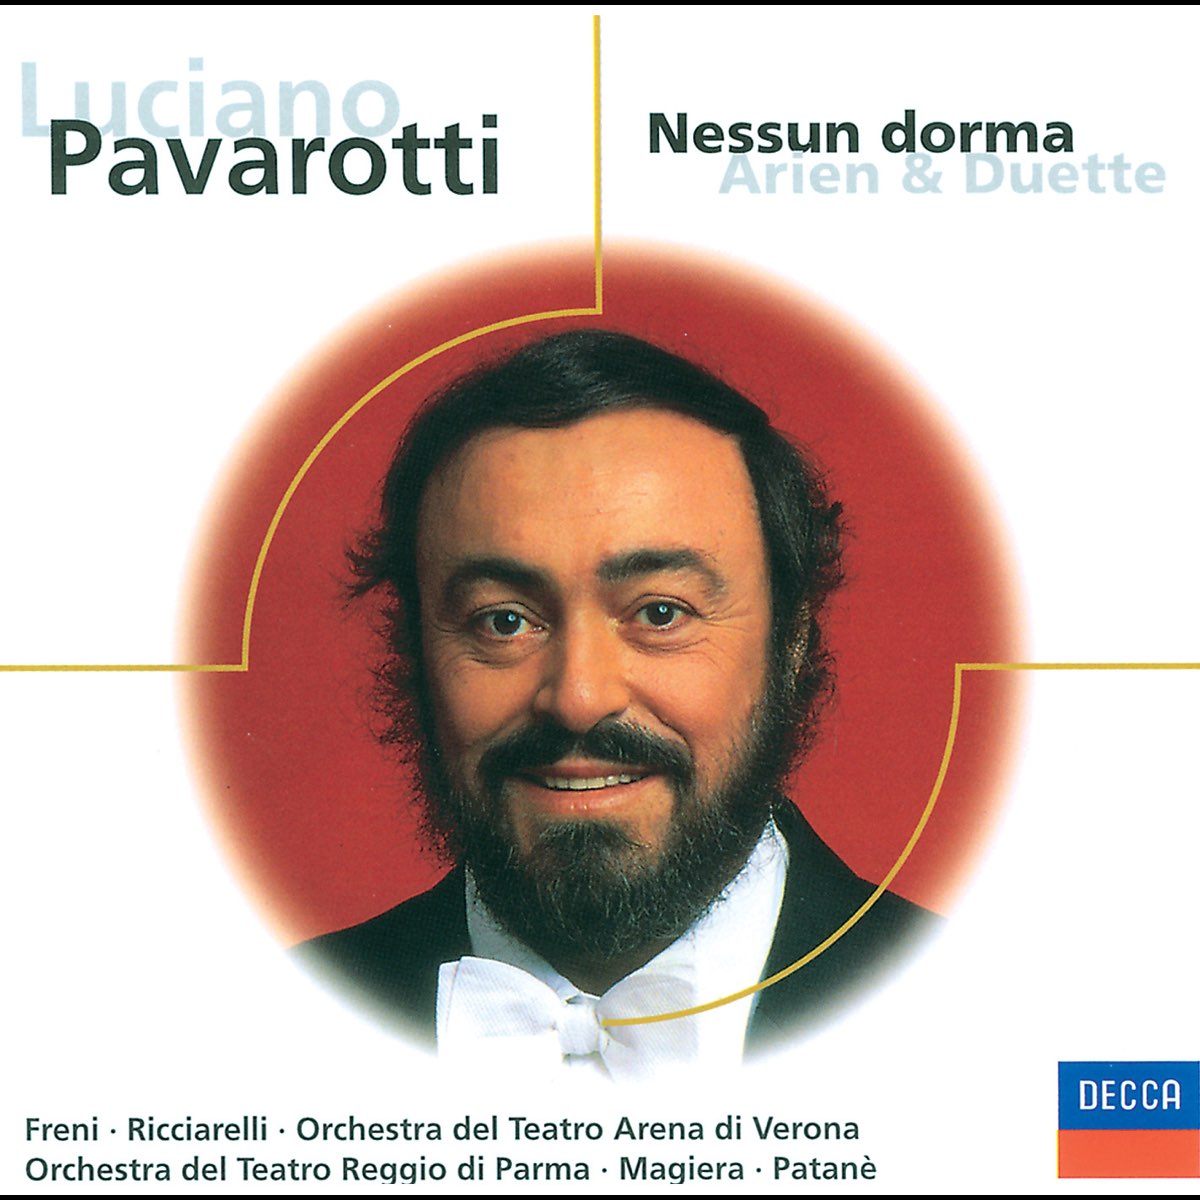 ‎Nessun dorma - Arien & Duette by Luciano Pavarotti on Apple Music